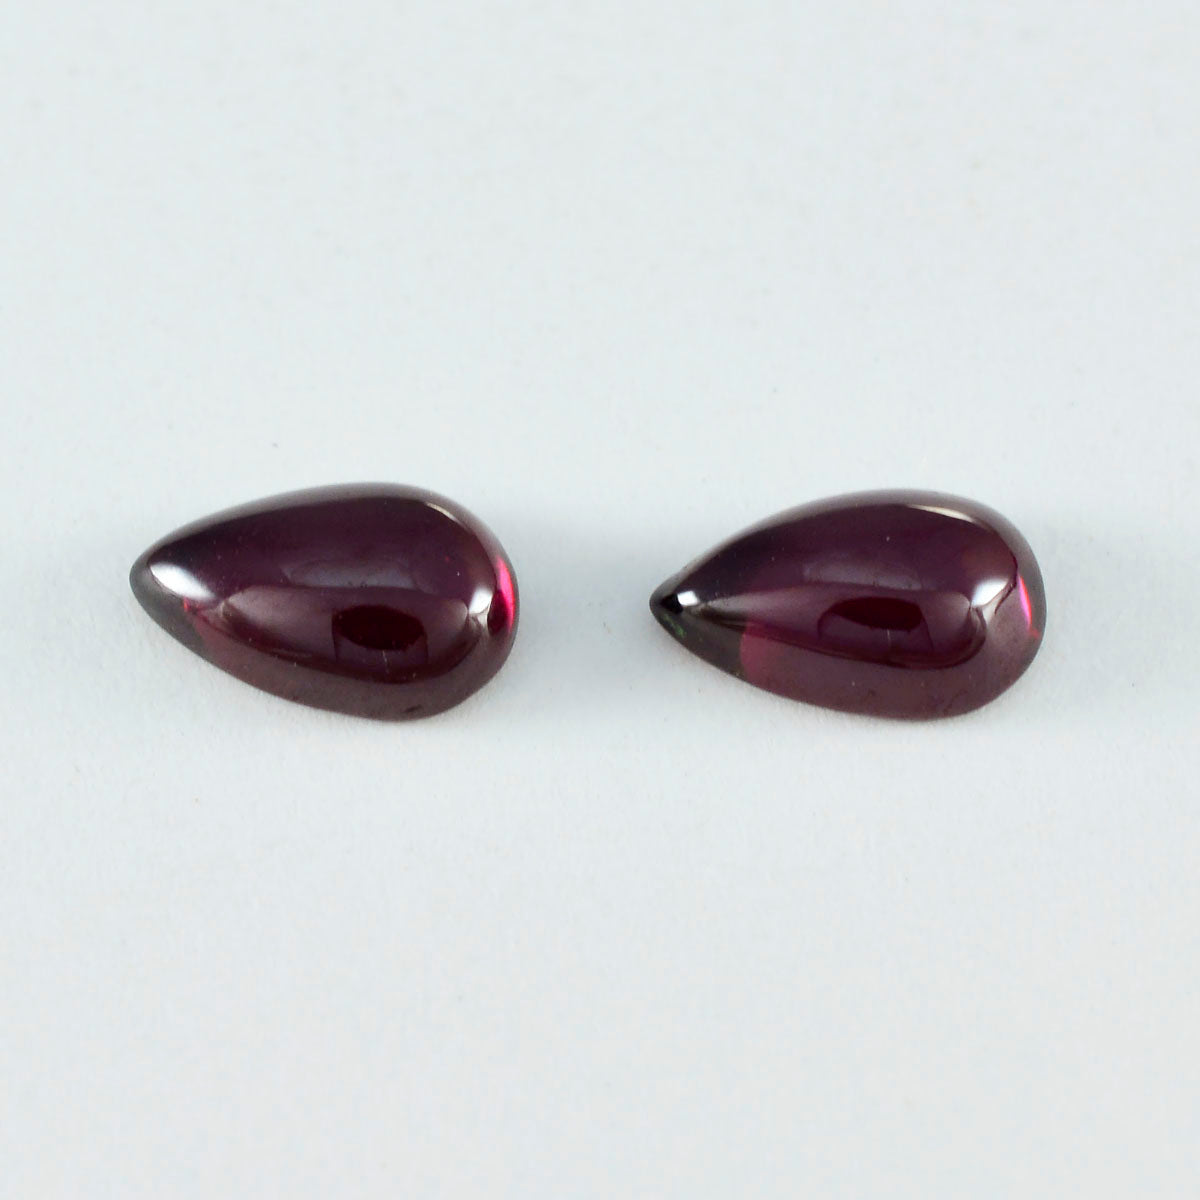 Riyogems 1PC Red Garnet Cabochon 8x12 mm Pear Shape sweet Quality Stone